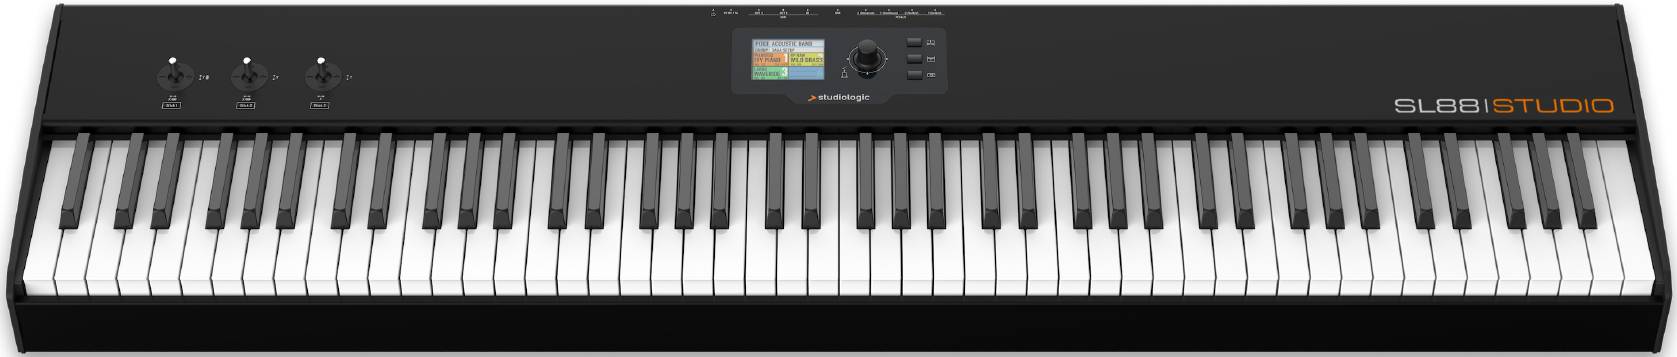 STUDIOLOGIC SL-88 Studio Master MIDI Keyboard